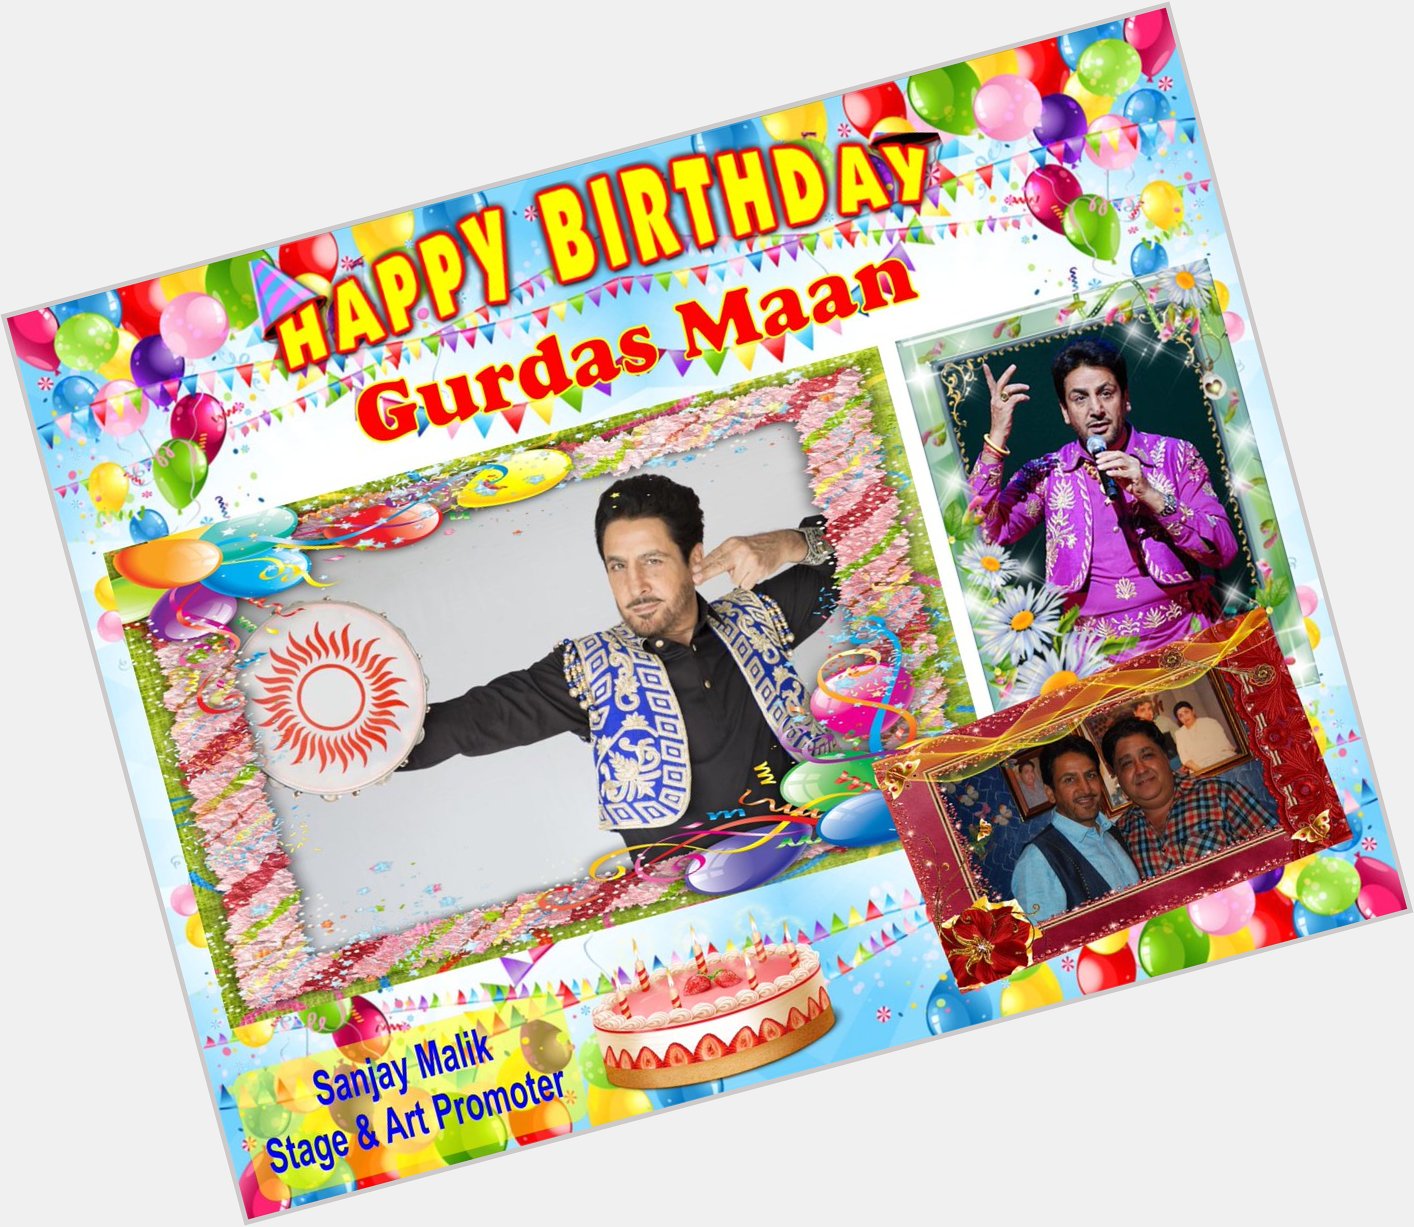 Happy Birthday to my always favourite Dr shri gurdas maan ji 